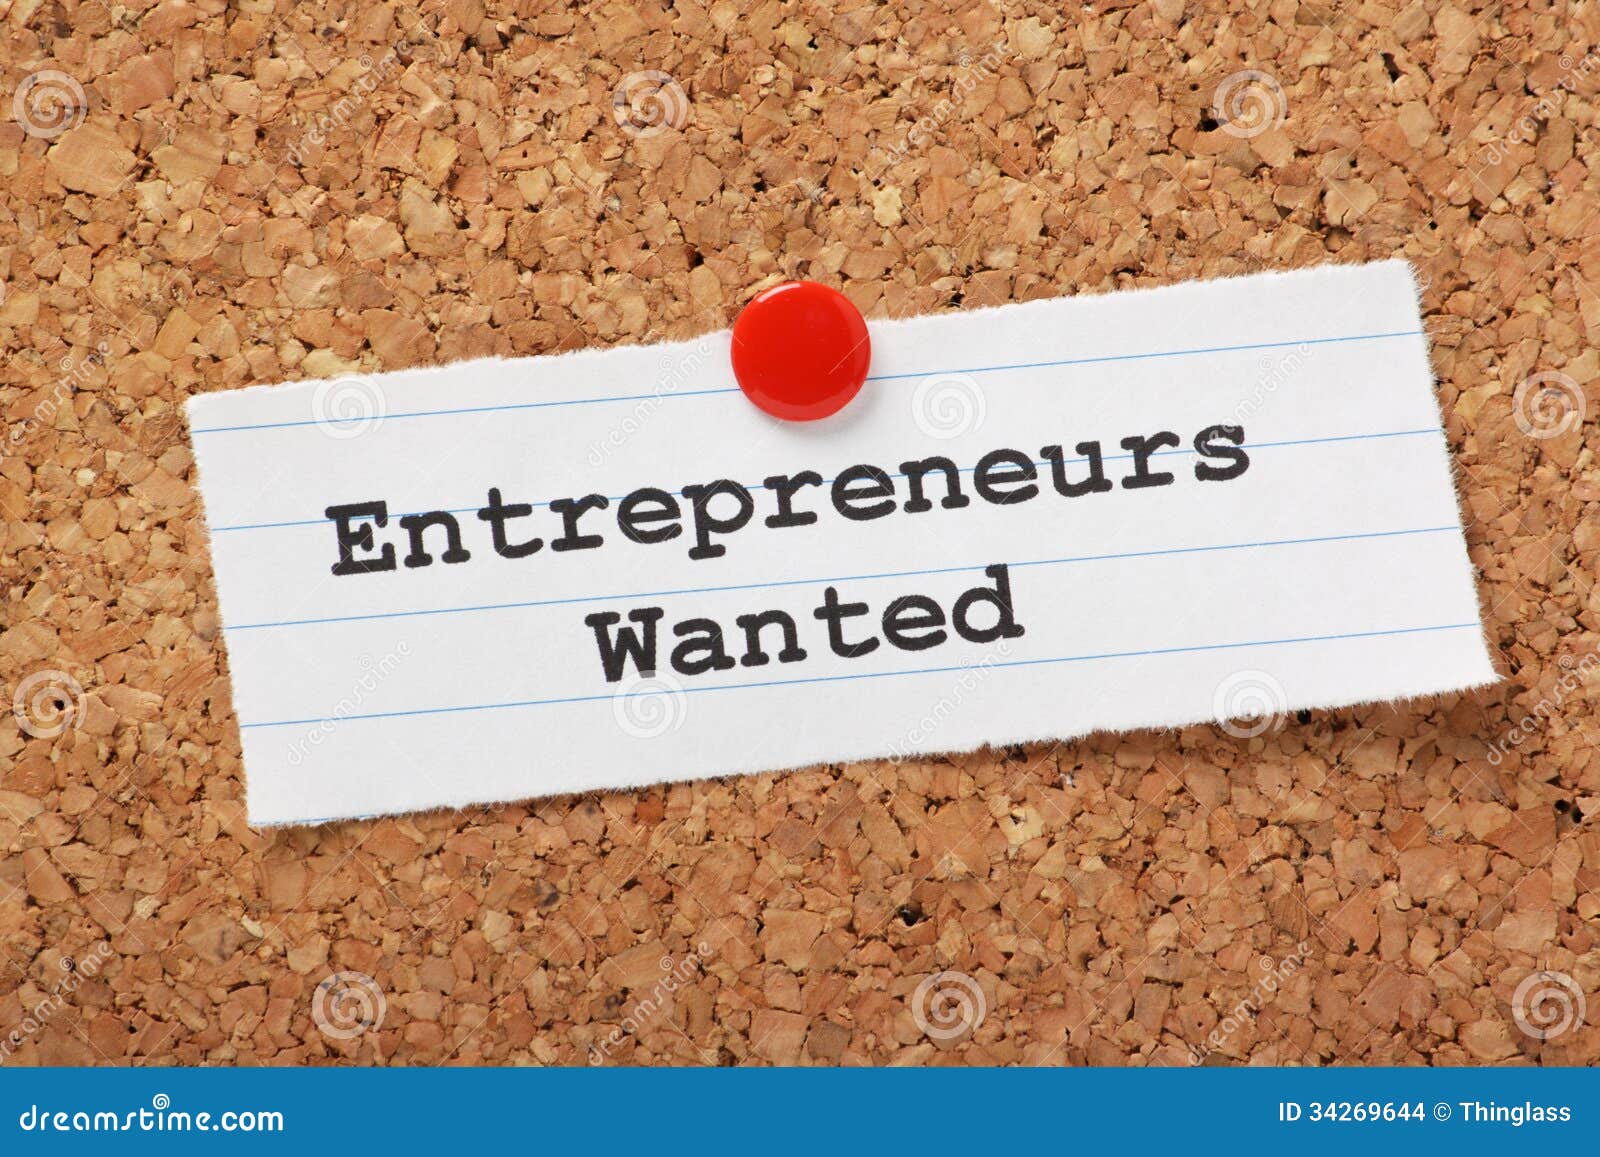 entrepreneurs wanted